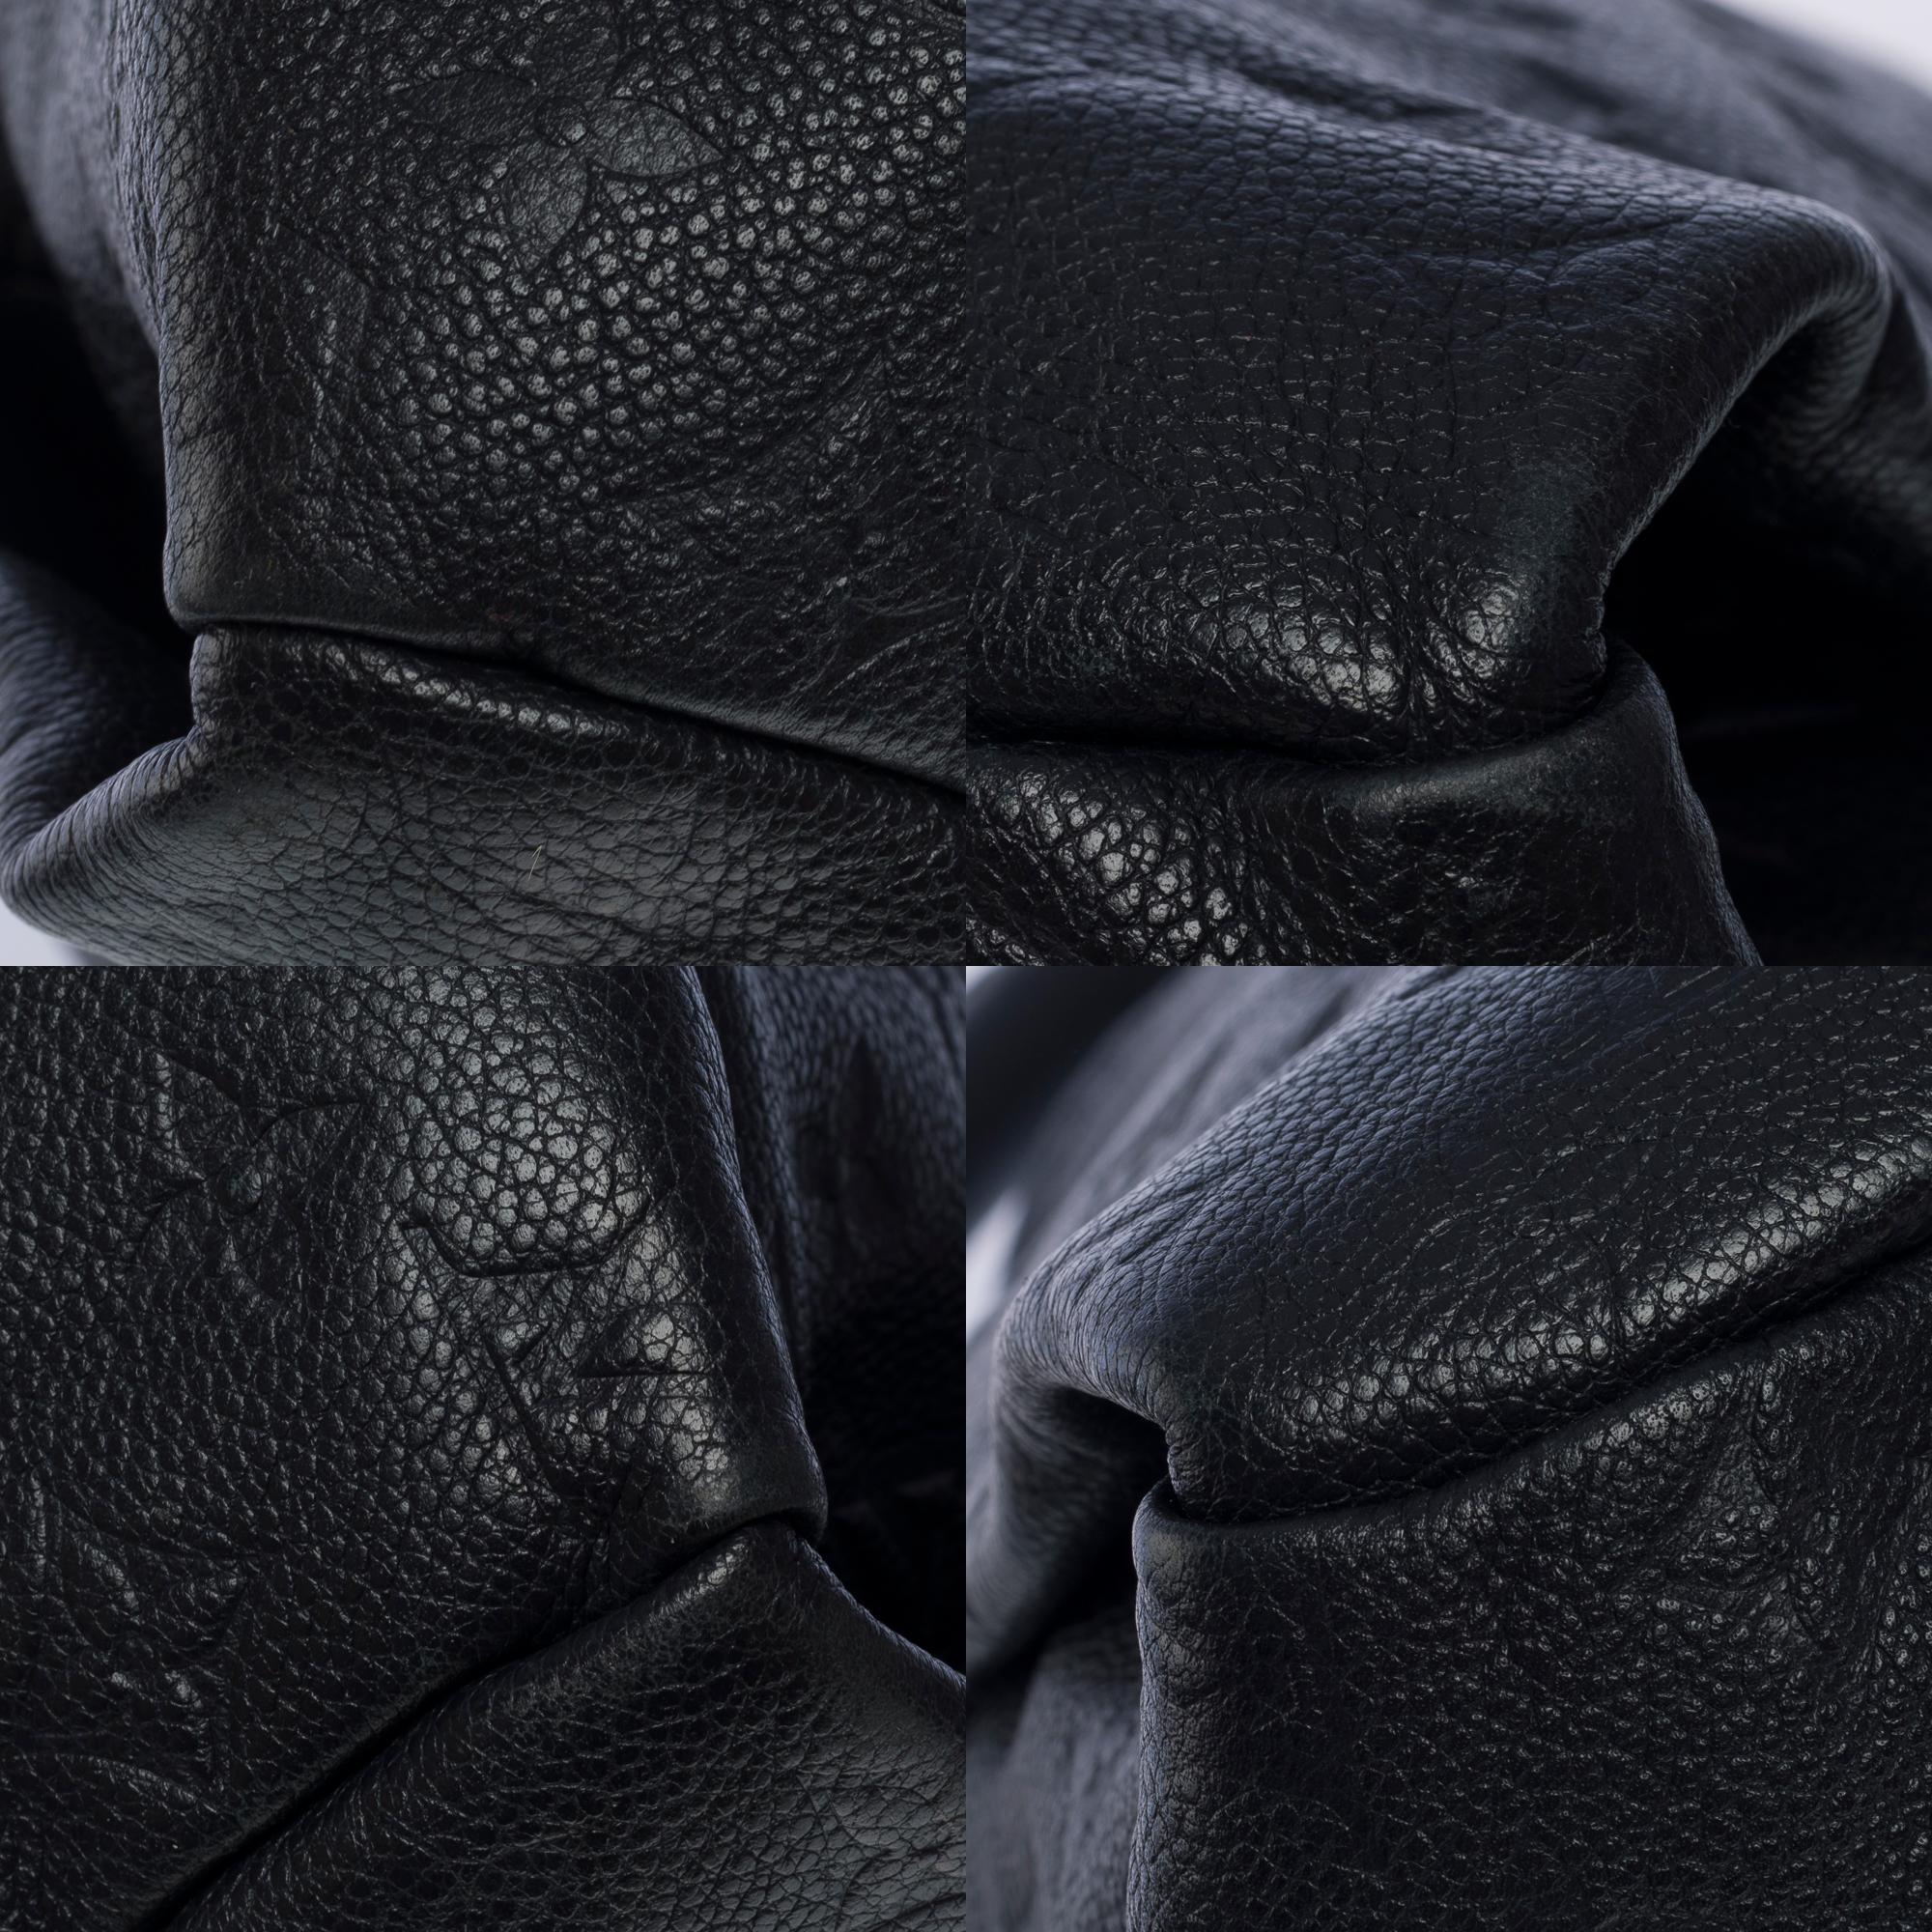 Louis Vuitton Artsy MM Hobo bag in dark blue monogram calfskin leather, GHW 6